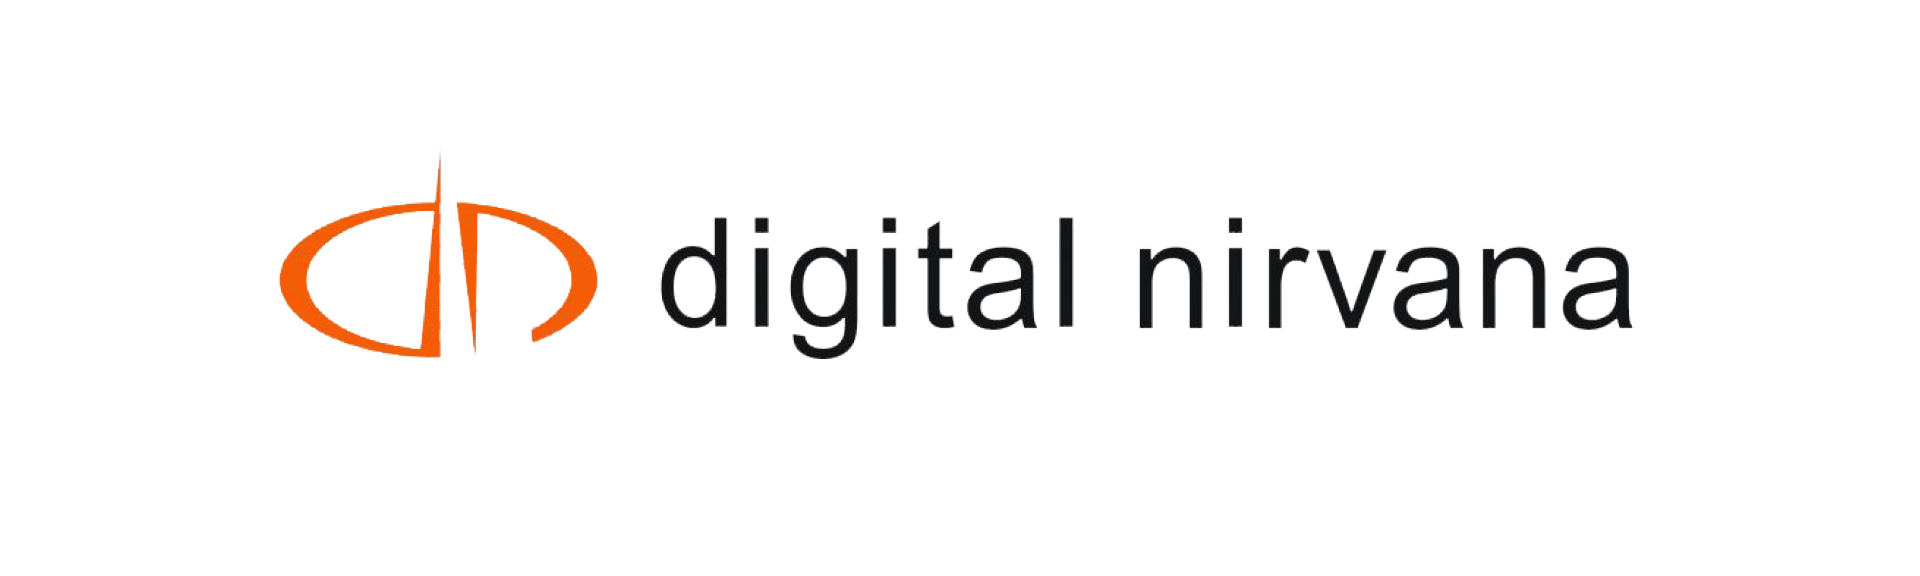 Digital nirvana